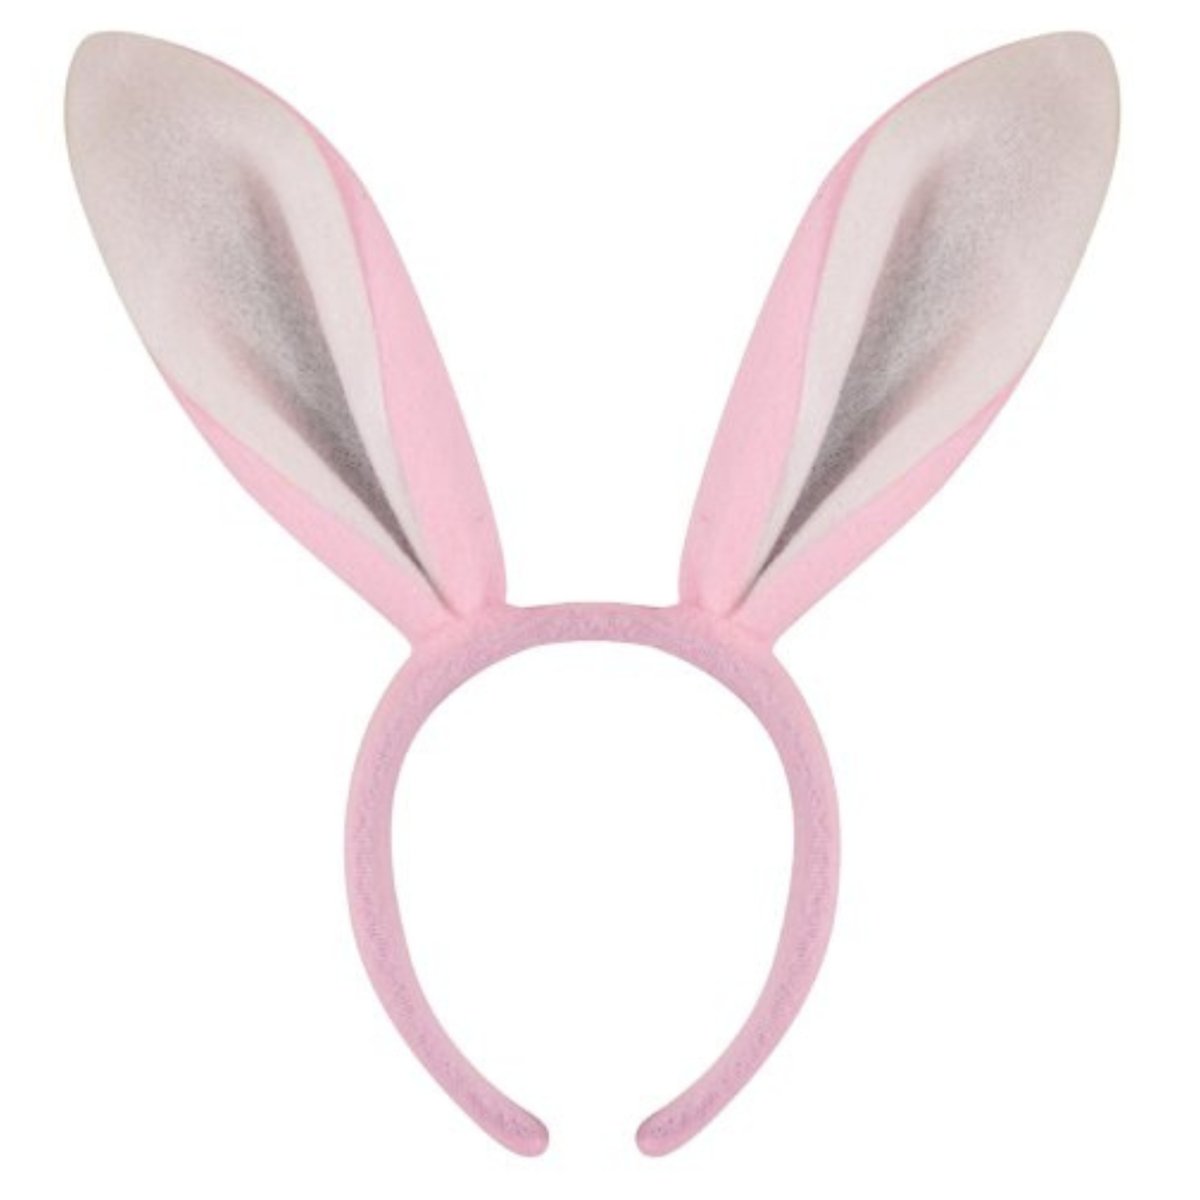 Easter Bunny Ears Headband - Kids Party Craft